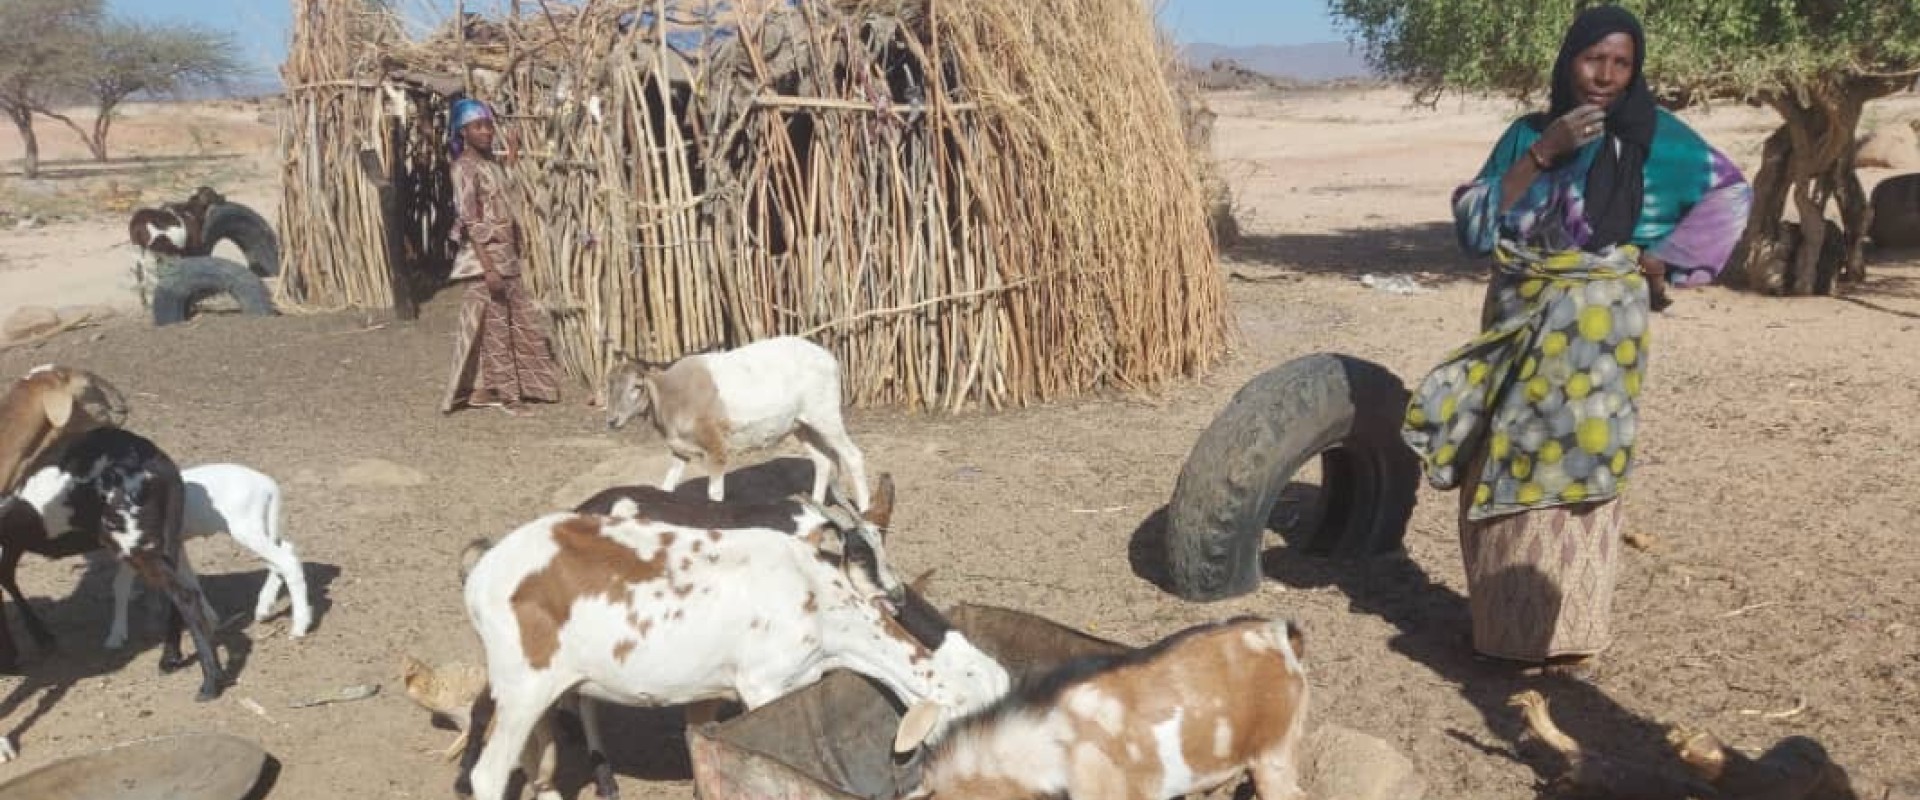 Balala tending her livestock. Photo: IOM